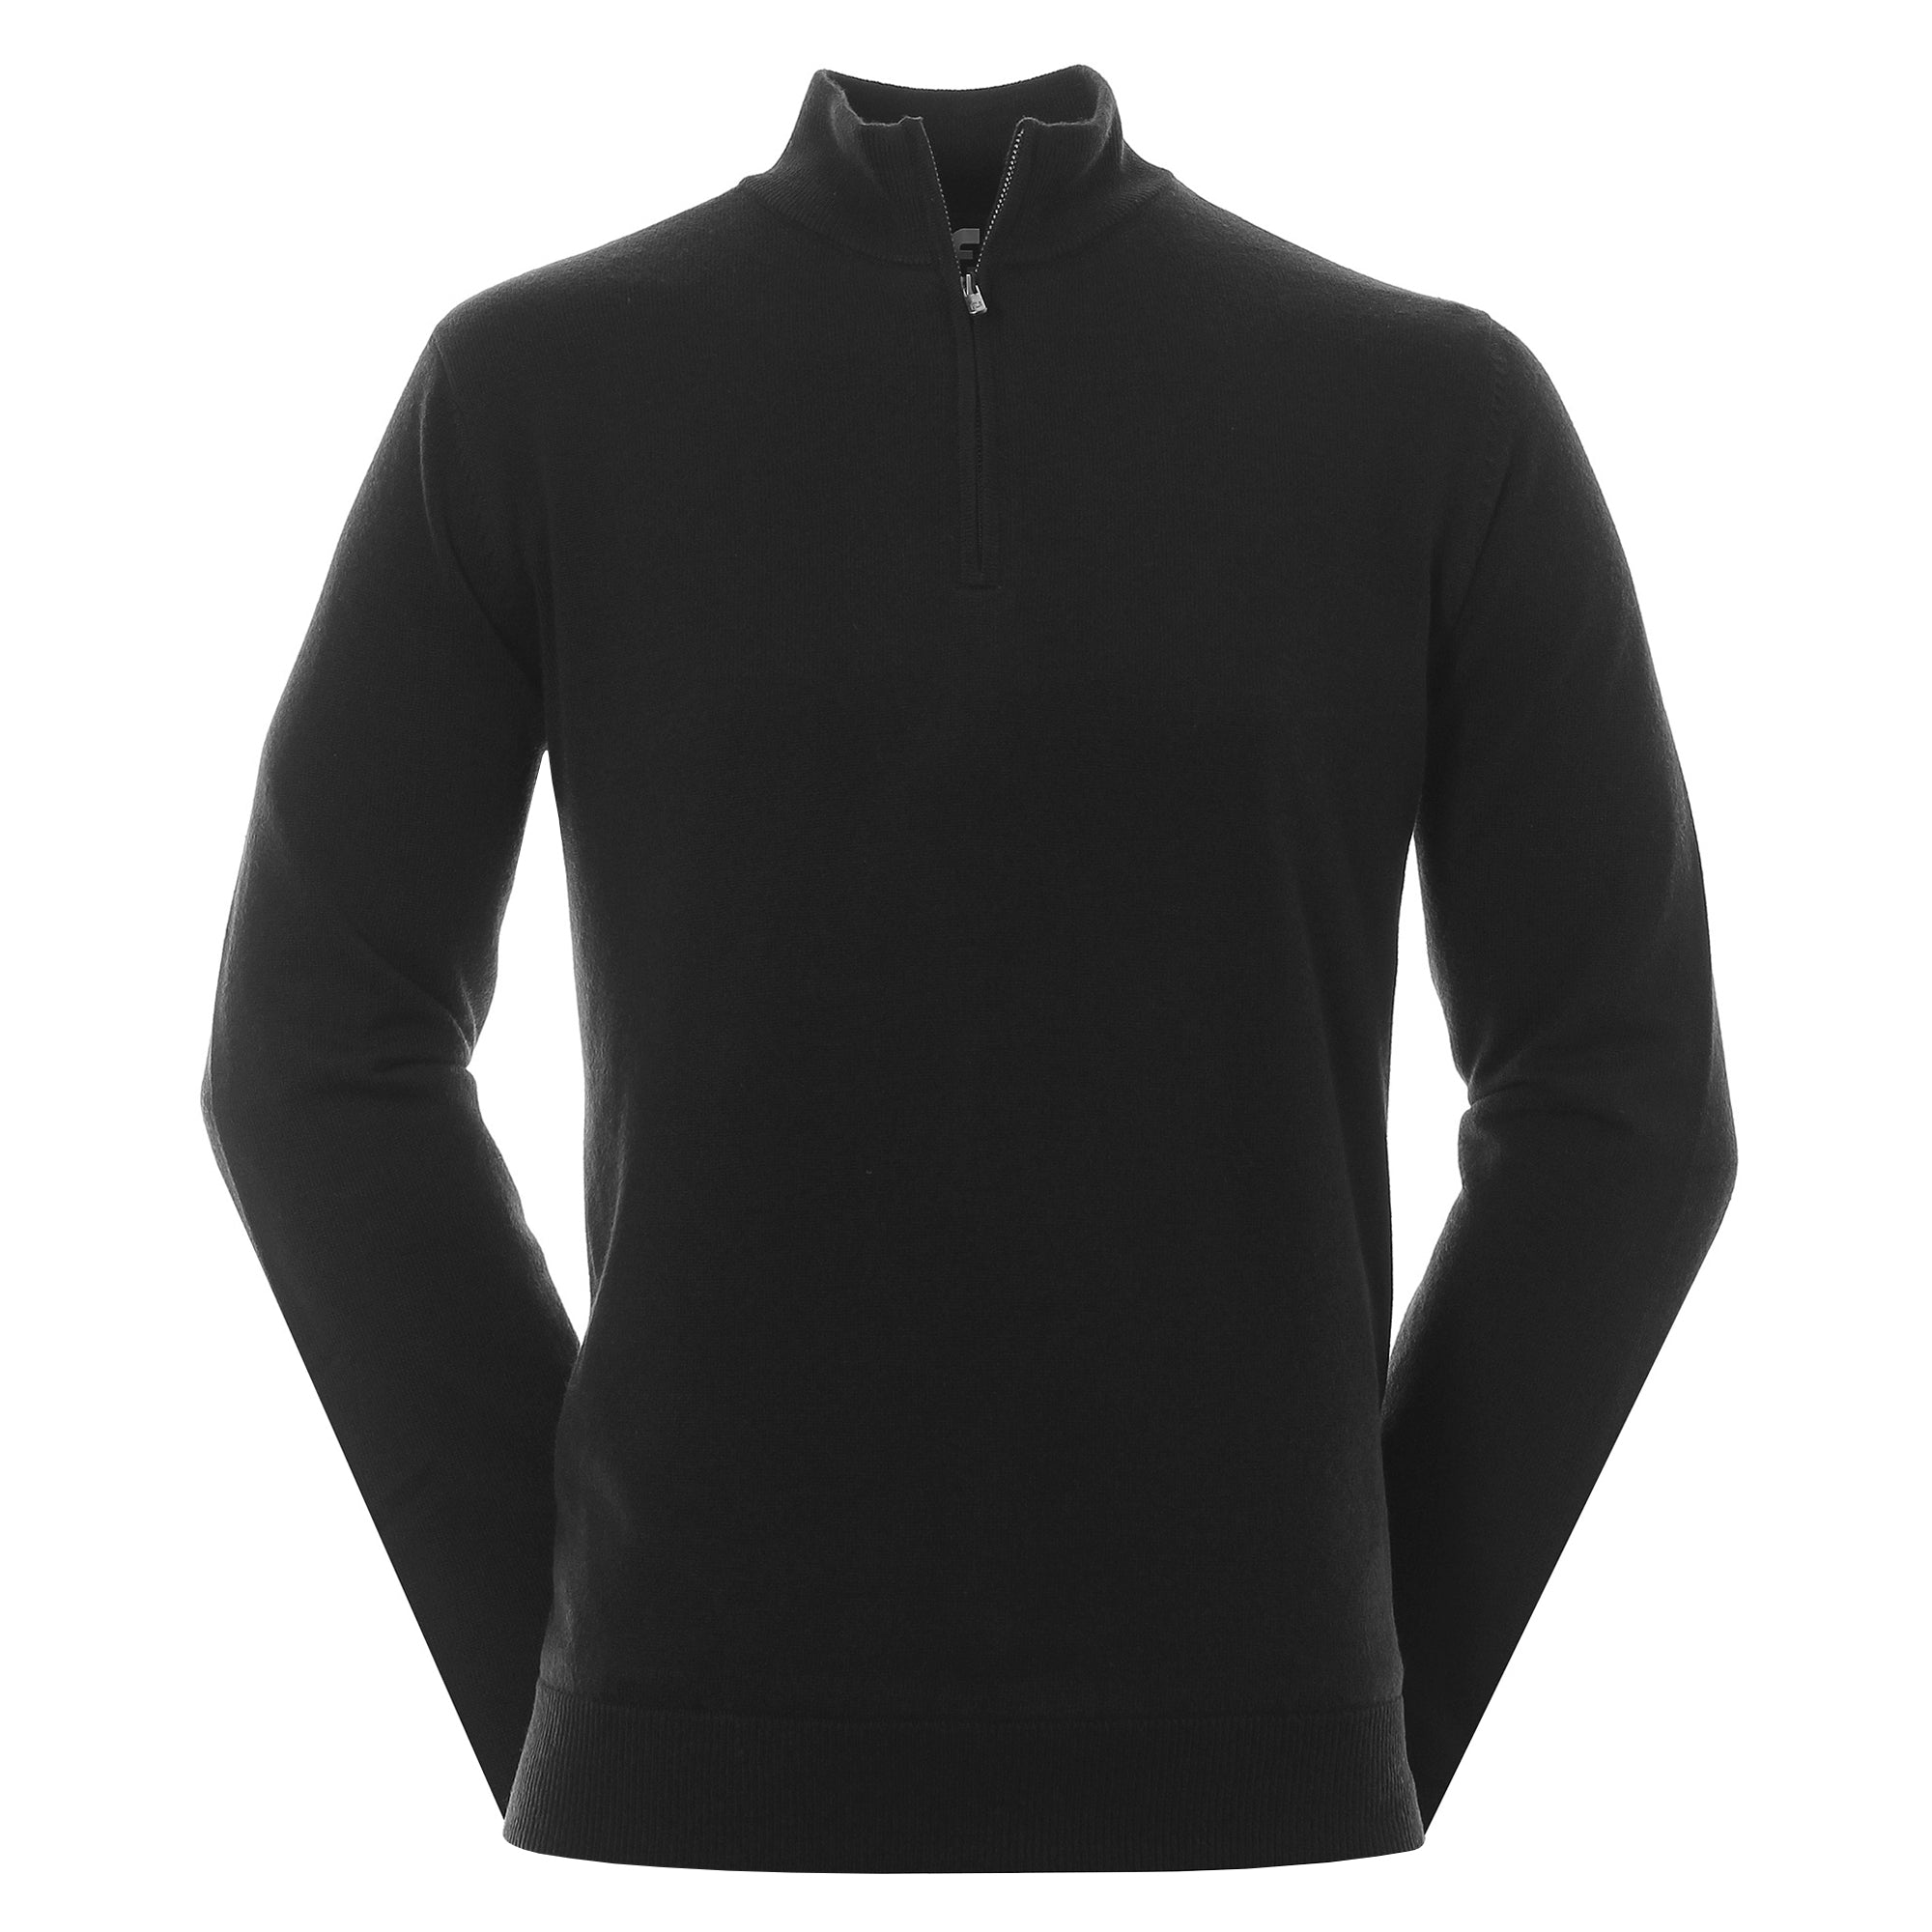 FootJoy Wool Blend Lined 1 2 Zip Sweater 90207 Black | Function18